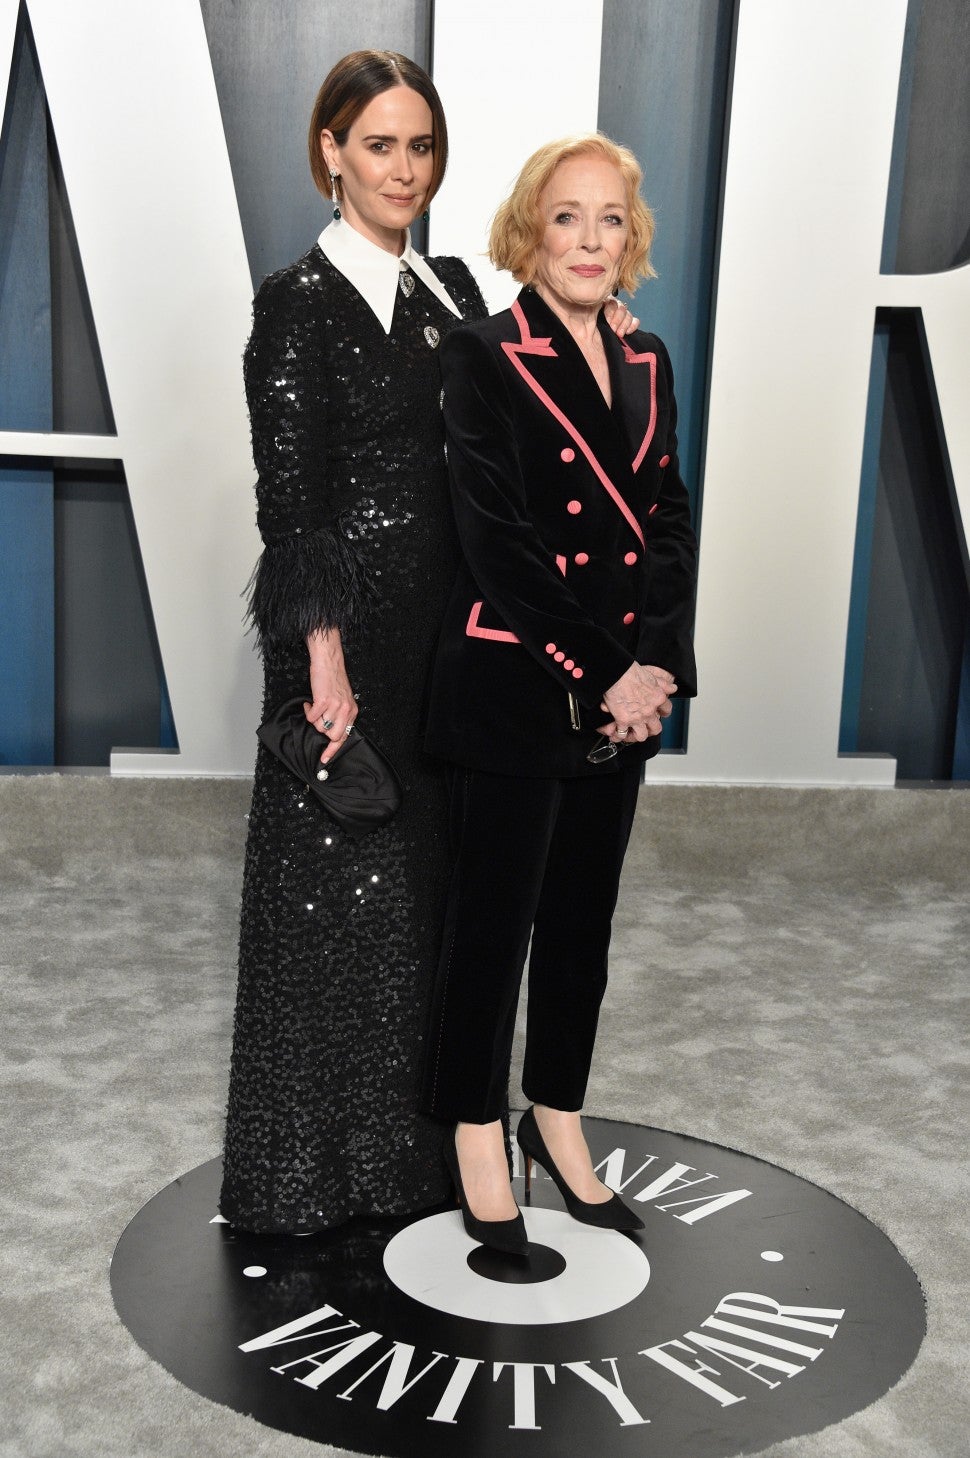 Sarah Paulson and Holland Taylor at the 2020 Vanity Fair Oscar Party